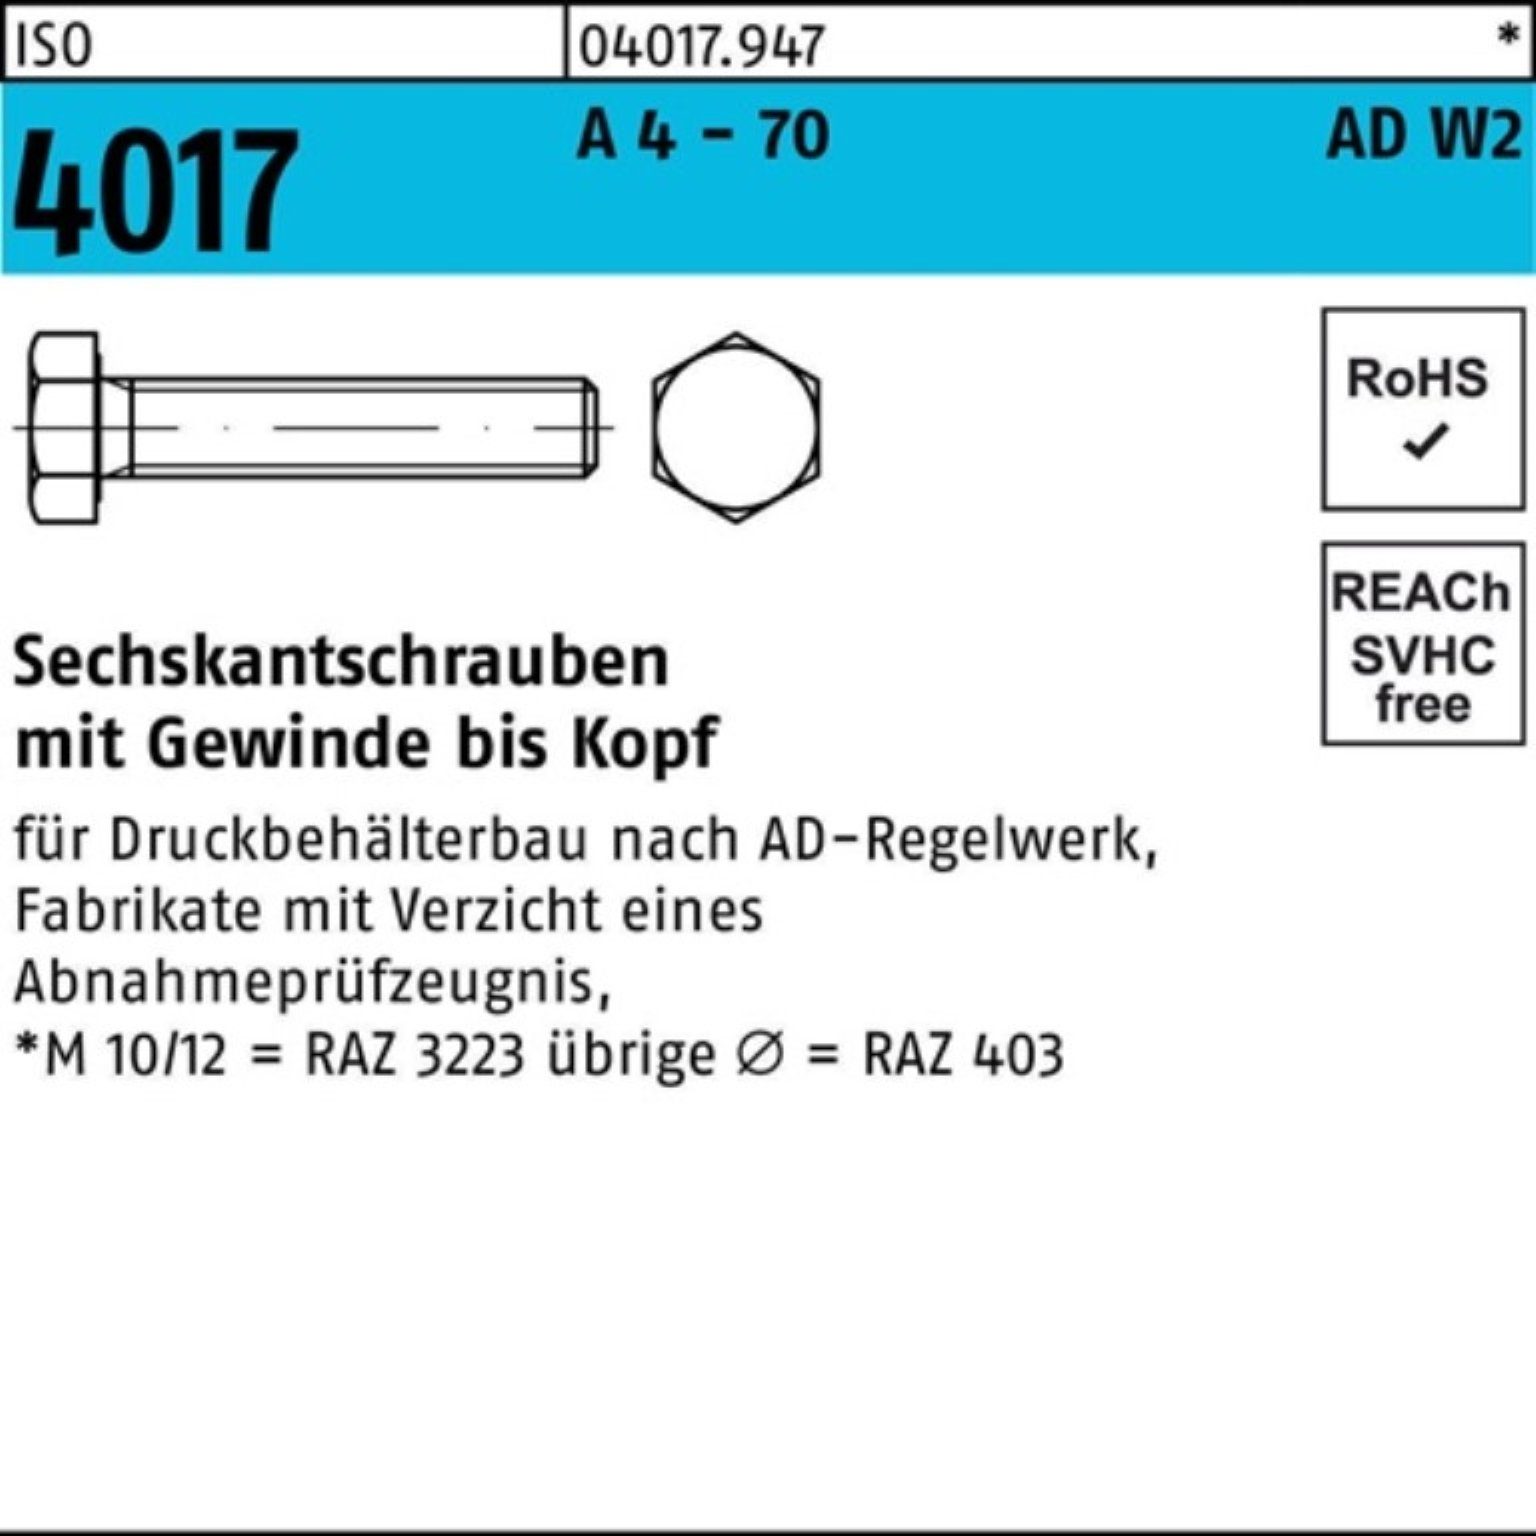 Bufab Sechskantschraube 100er Pack Sechskantschraube ISO 4017 VG M24x 110 A 4 - 70 AD-W2 1 St